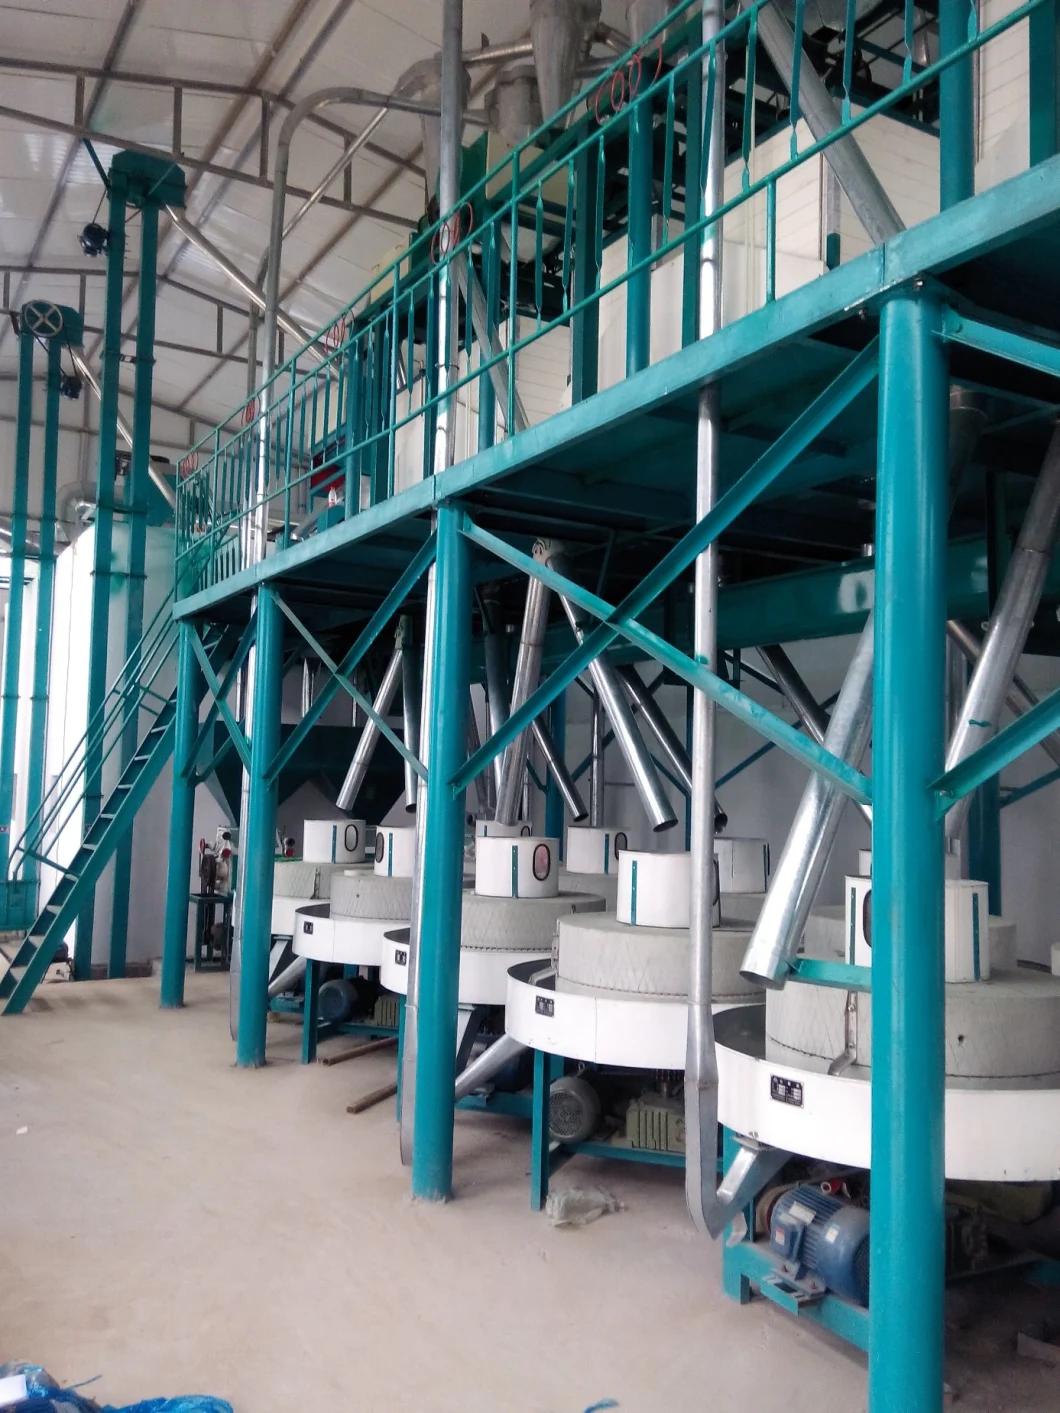 Wheat Flour Mill Machinery/Wheat Flour Milling Production Line